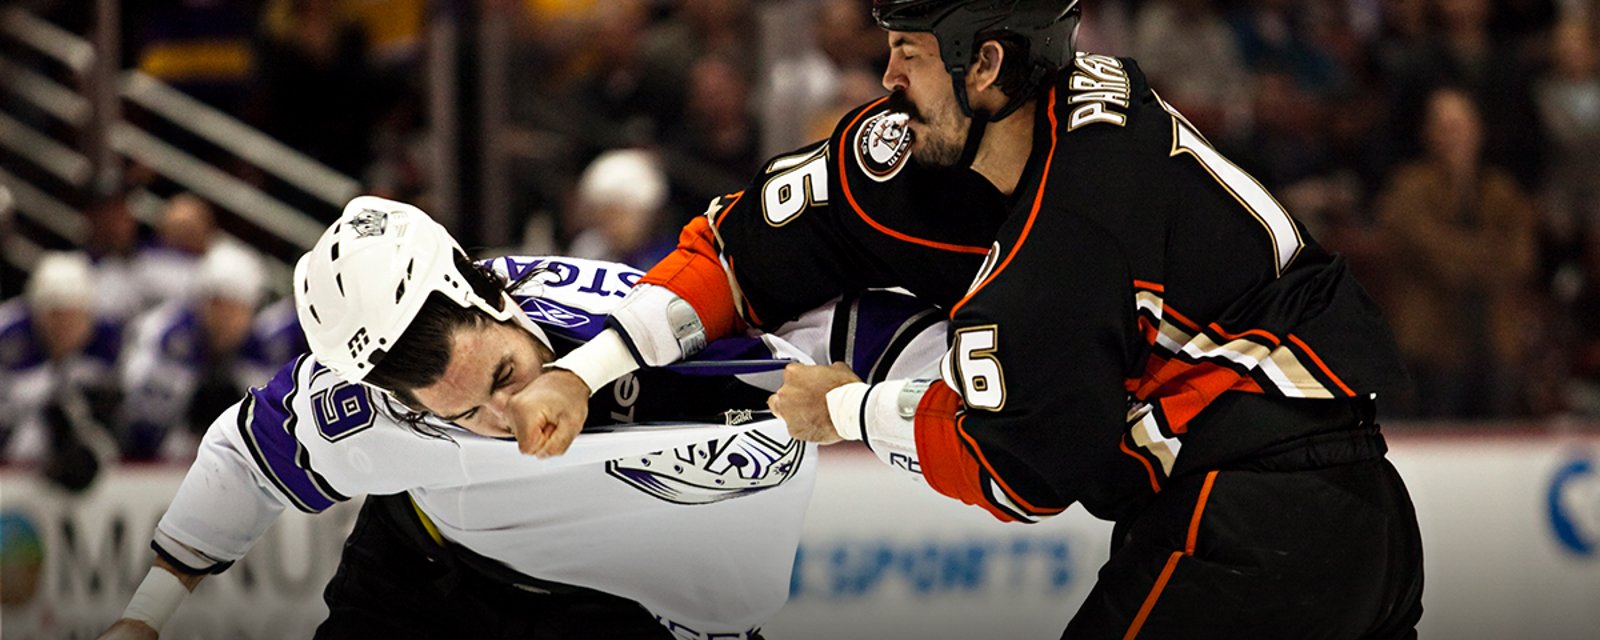 Breaking: Legendary Ducks enforcer Parros named head of NHL Player Safety